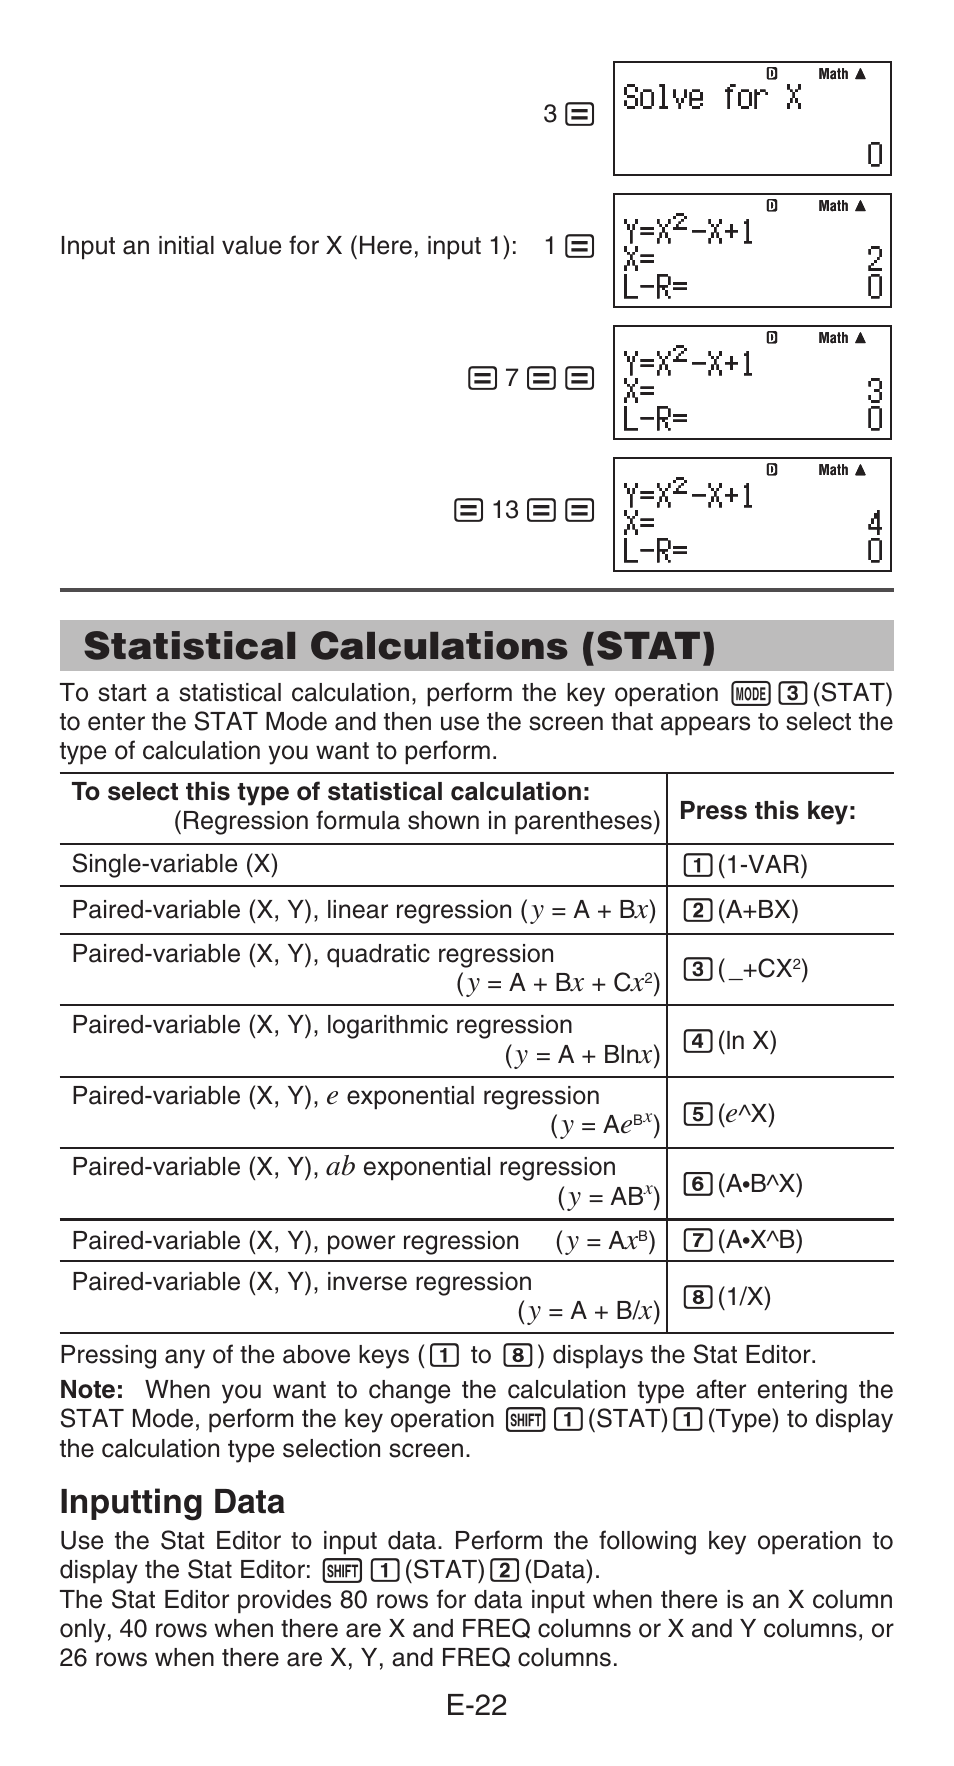 Statistical calculations (stat), Inputting data, E-22 | Casio fx-991ES PLUS  User Manual | Page 23 / 46